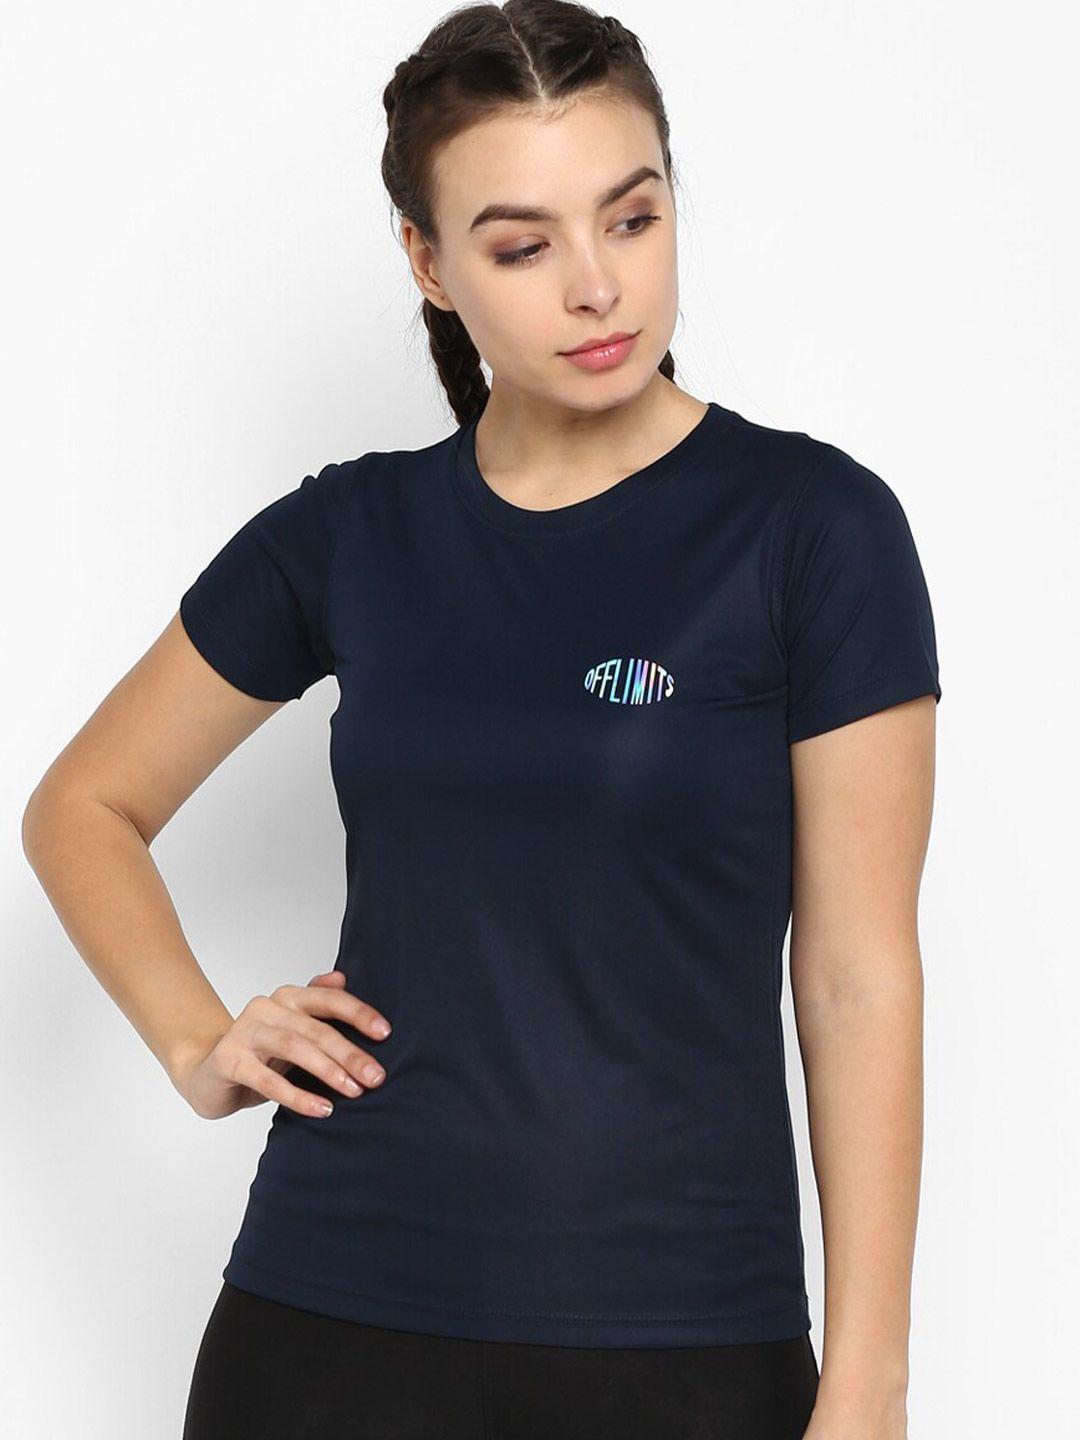 off-limits-women-navy-blue-slim-fit-t-shirt